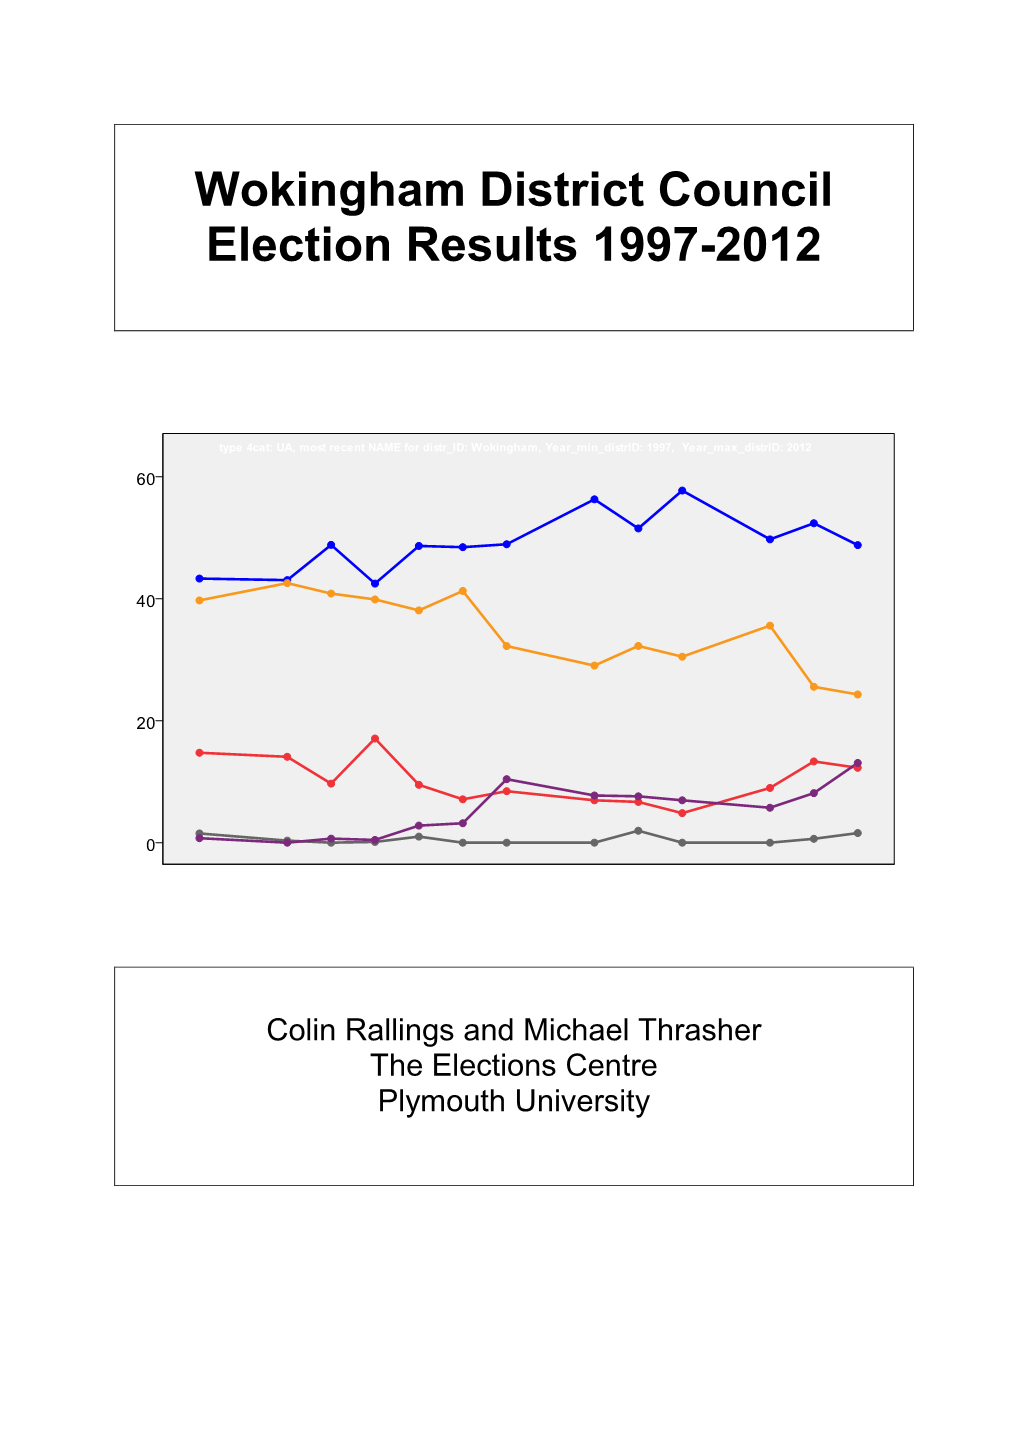 Wokingham District Council Election Results 1997-2012